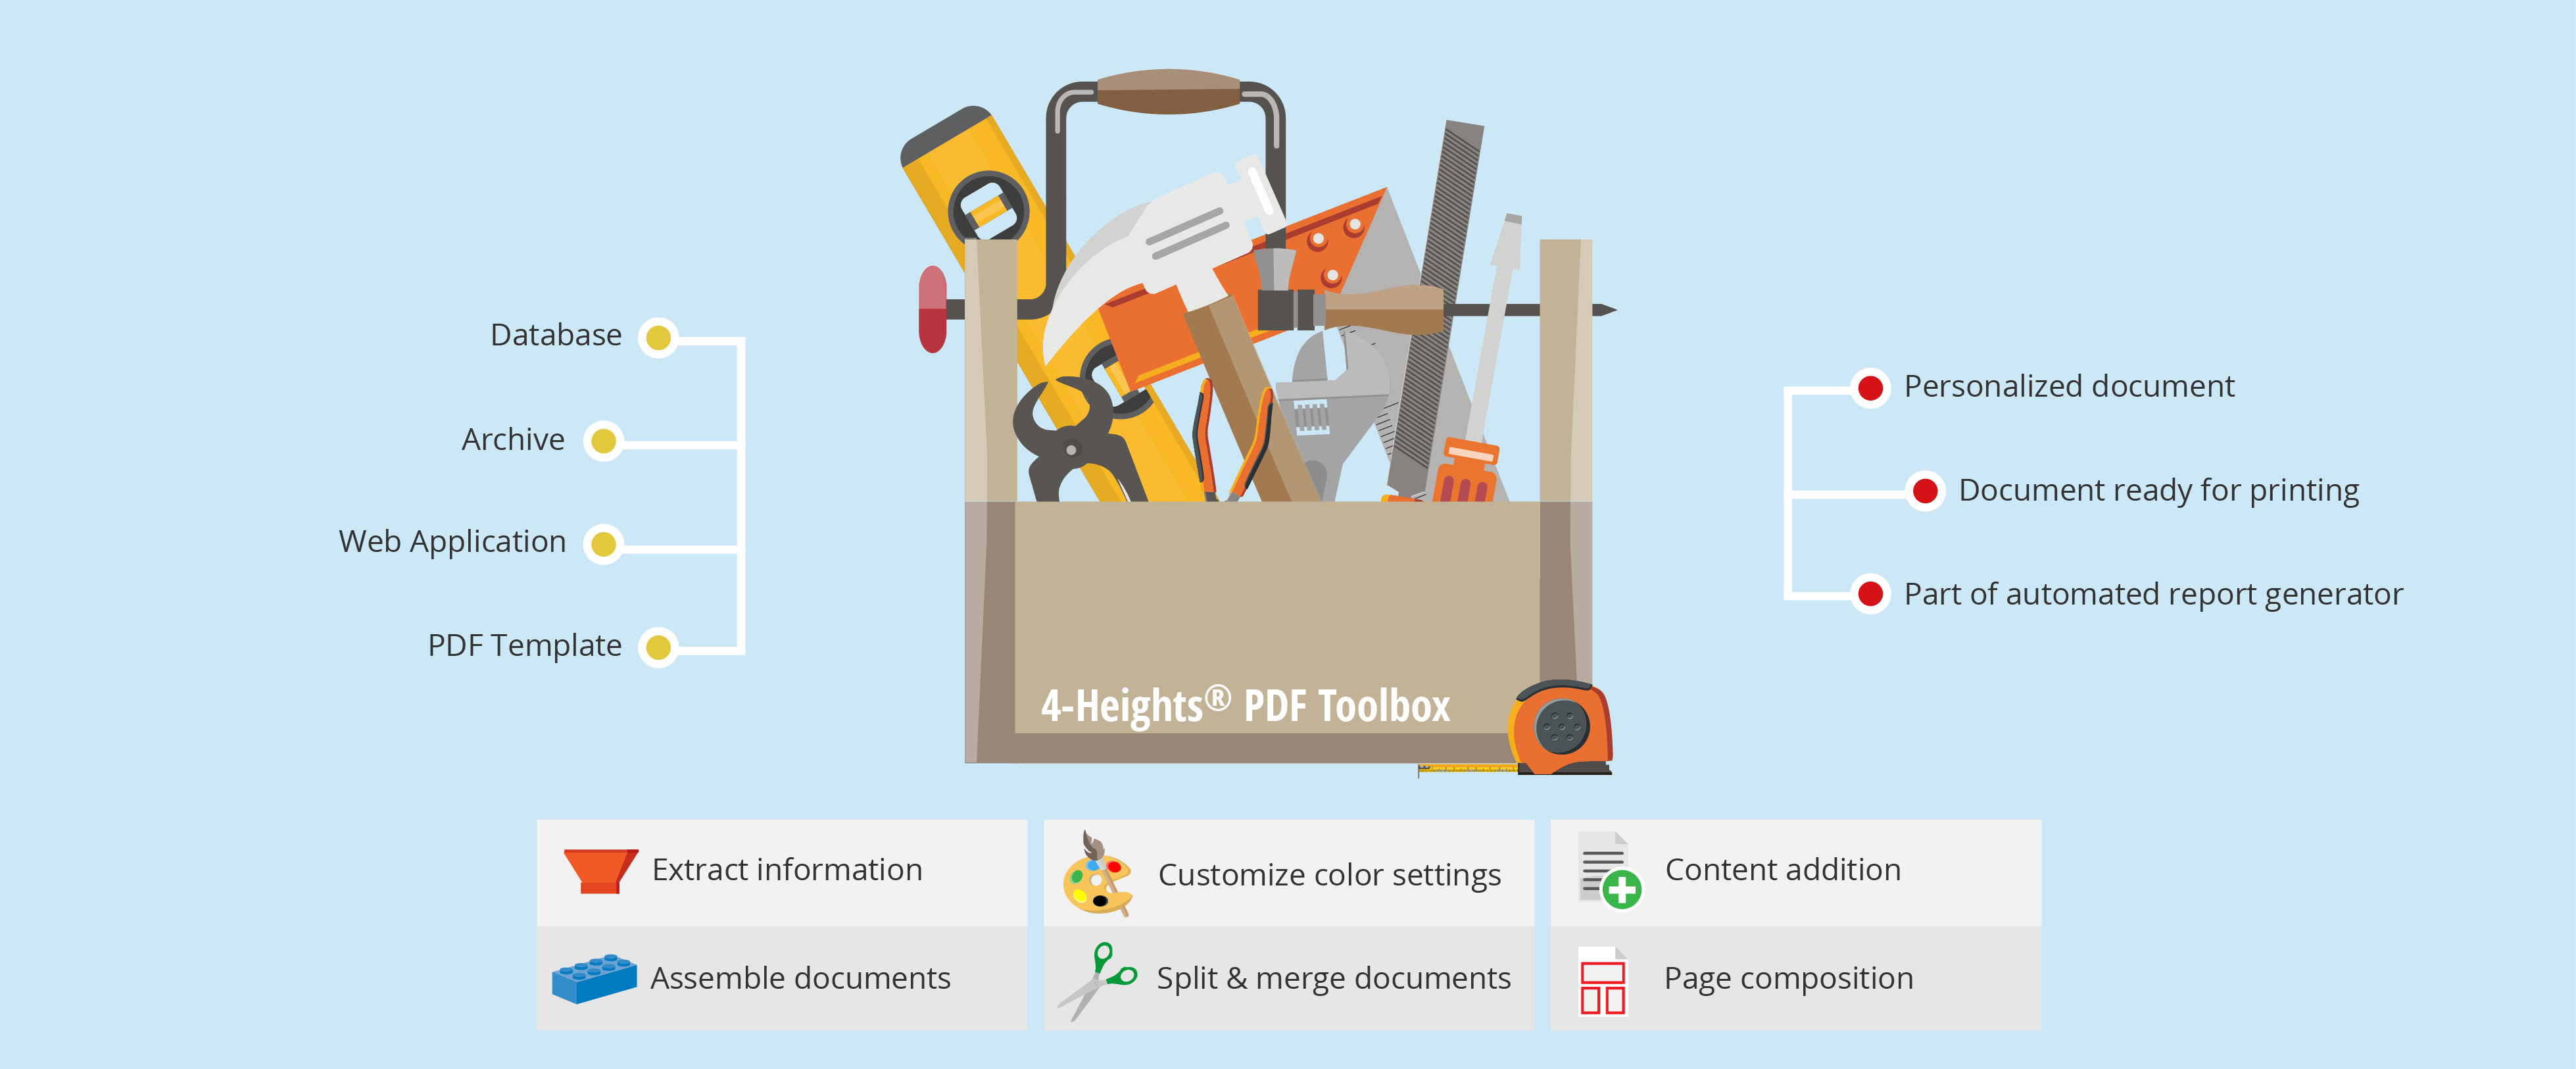 4-Heights® PDF Toolbox SDK - Product Image